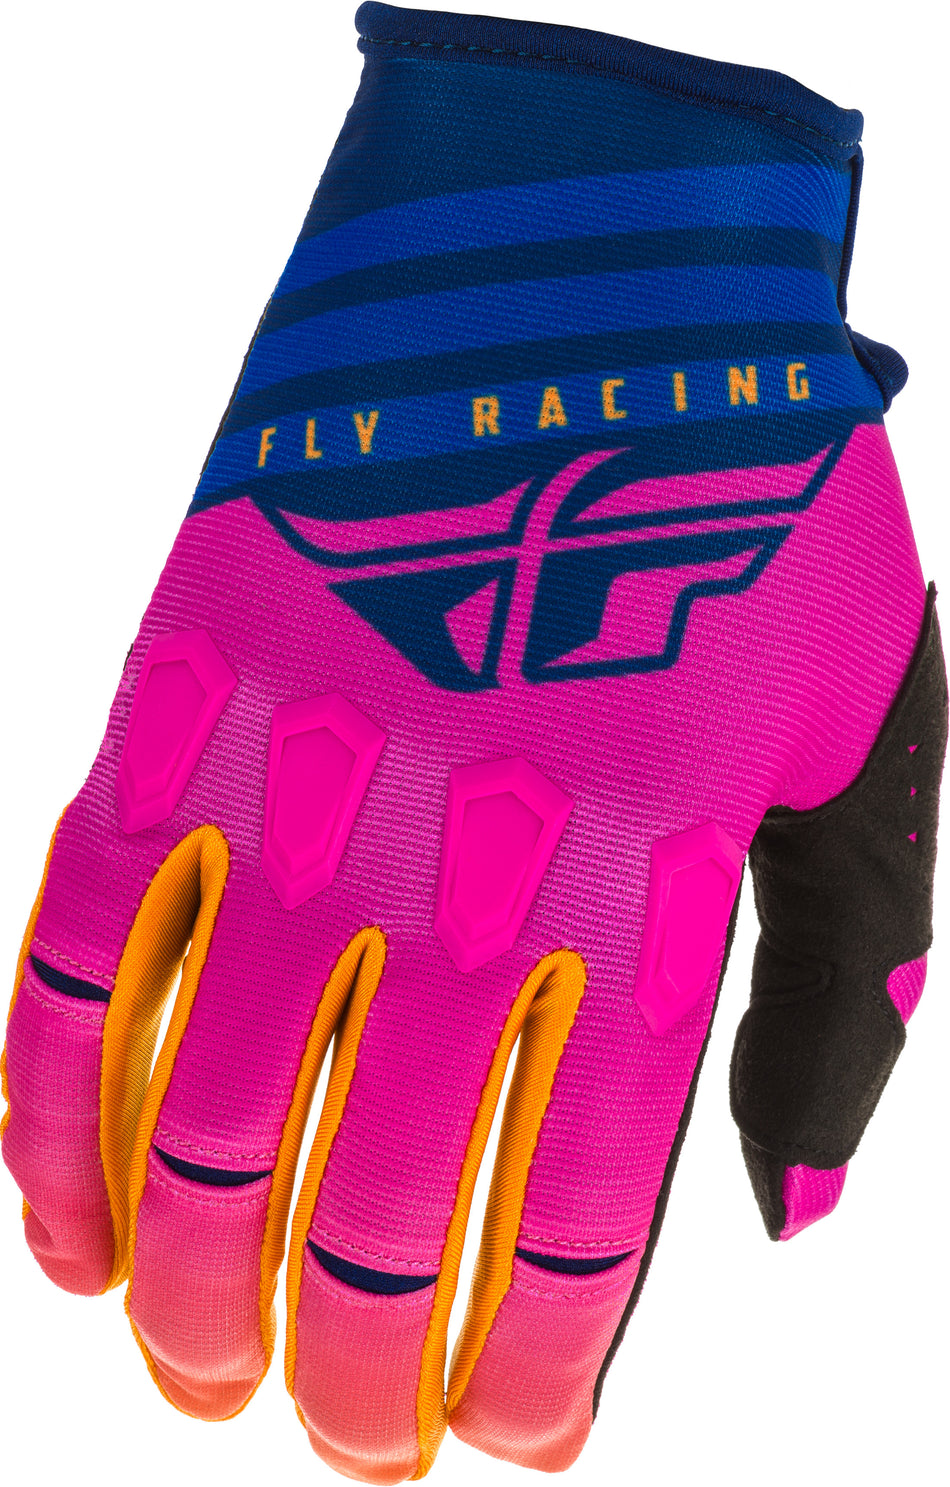 FLY RACING Kinetic K220 Gloves Midnight/Blue/Orange Sz 07 373-51907